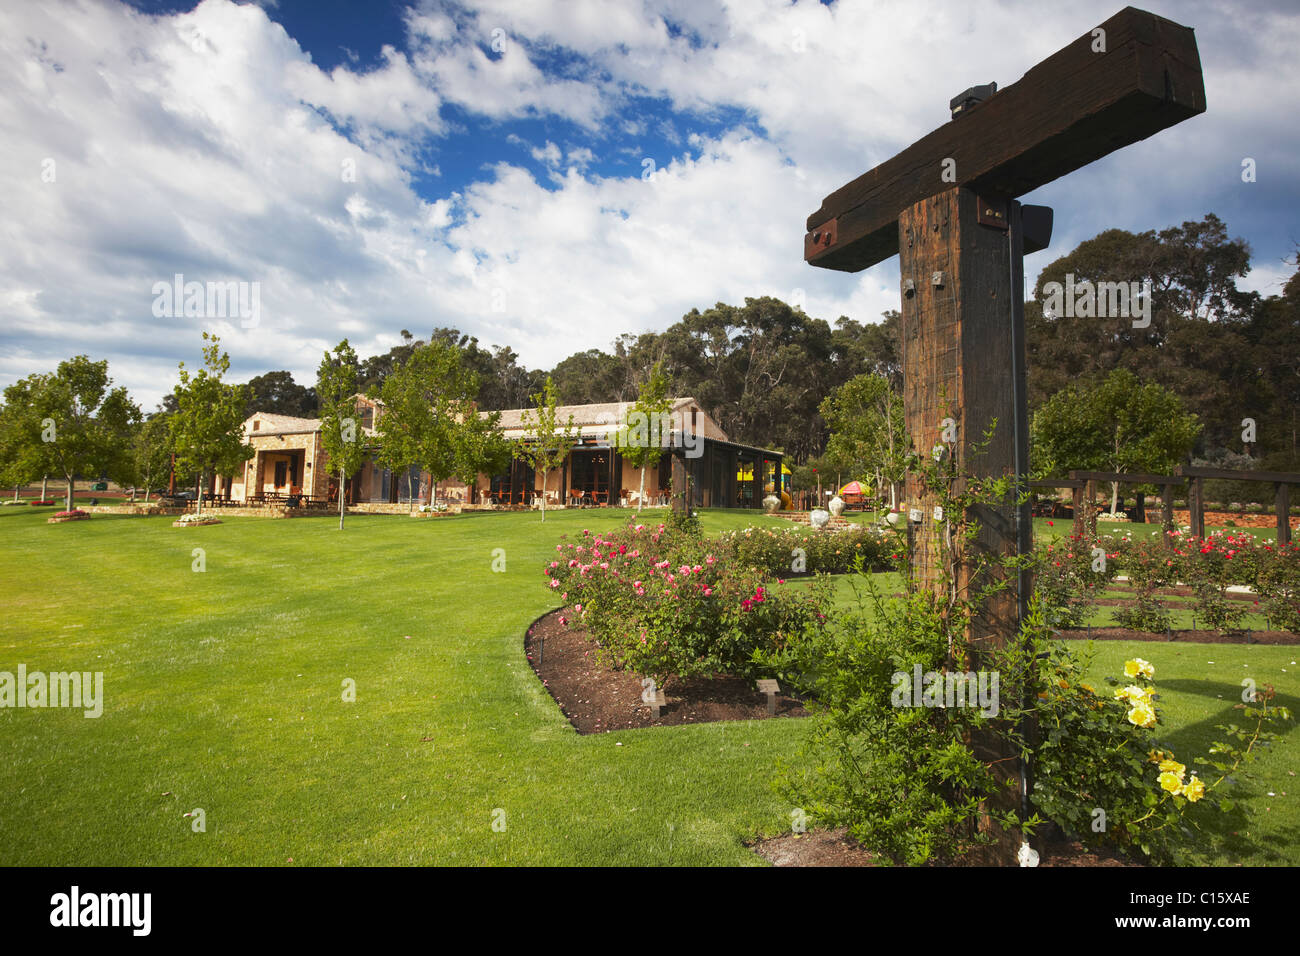 Garden at Laurence wine estate, Margaret River, Western Australia, Australia Stock Photo